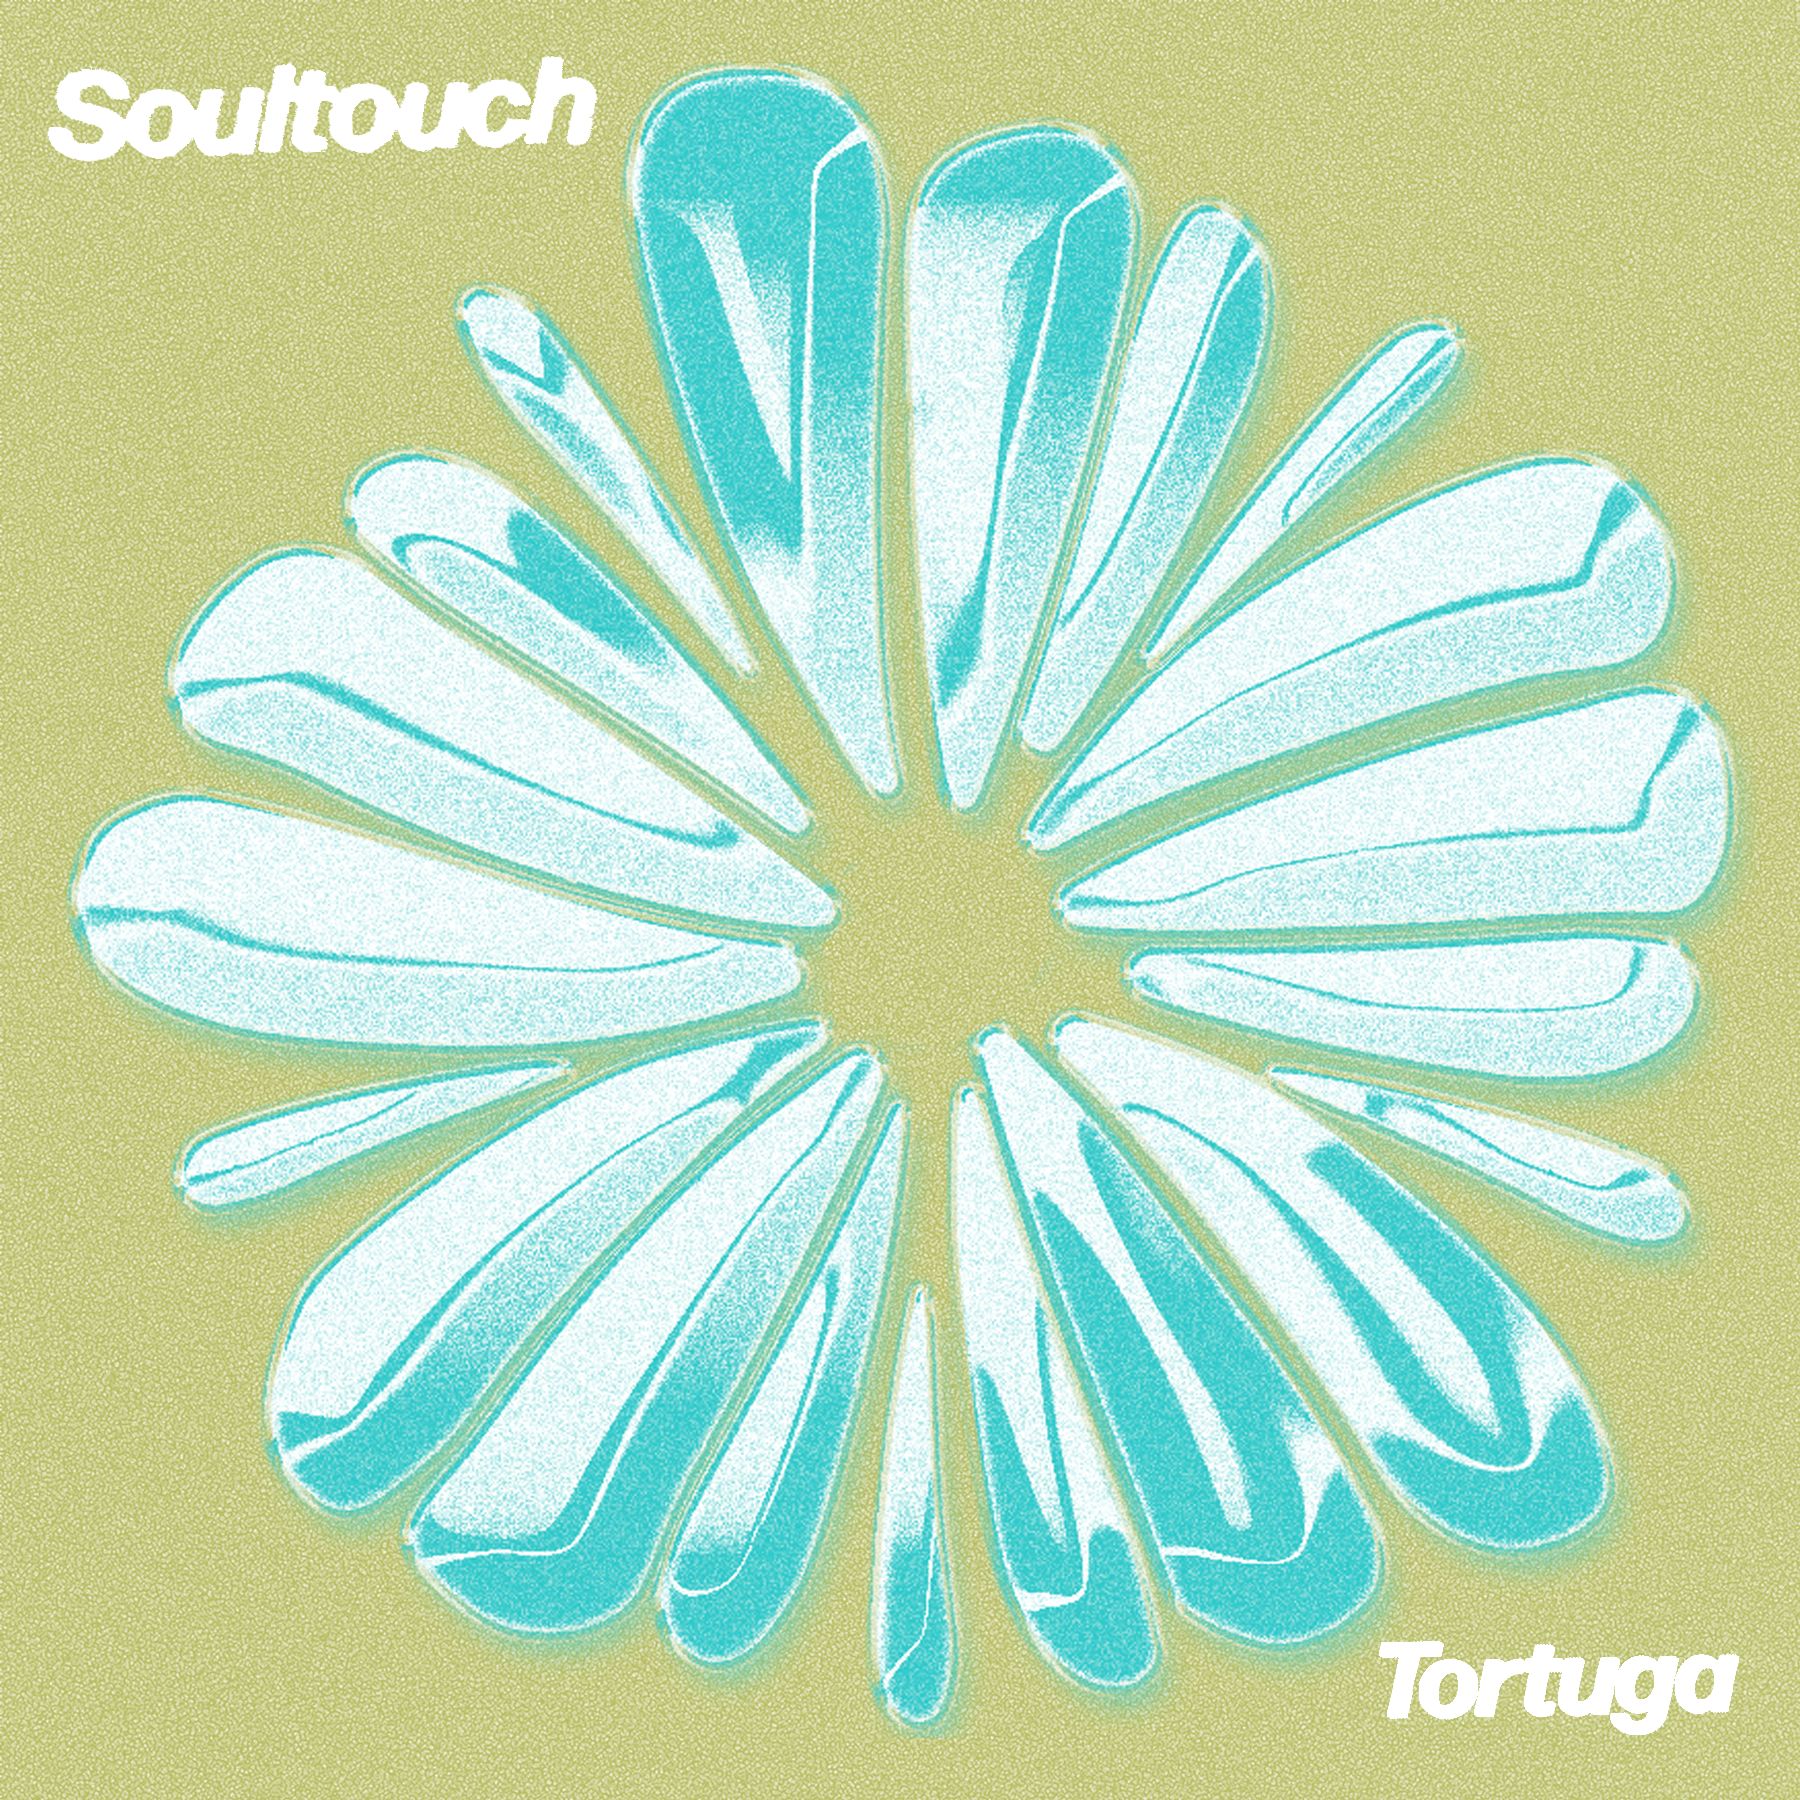 Tikiake PREMIERE : Tortuga - Soultouch